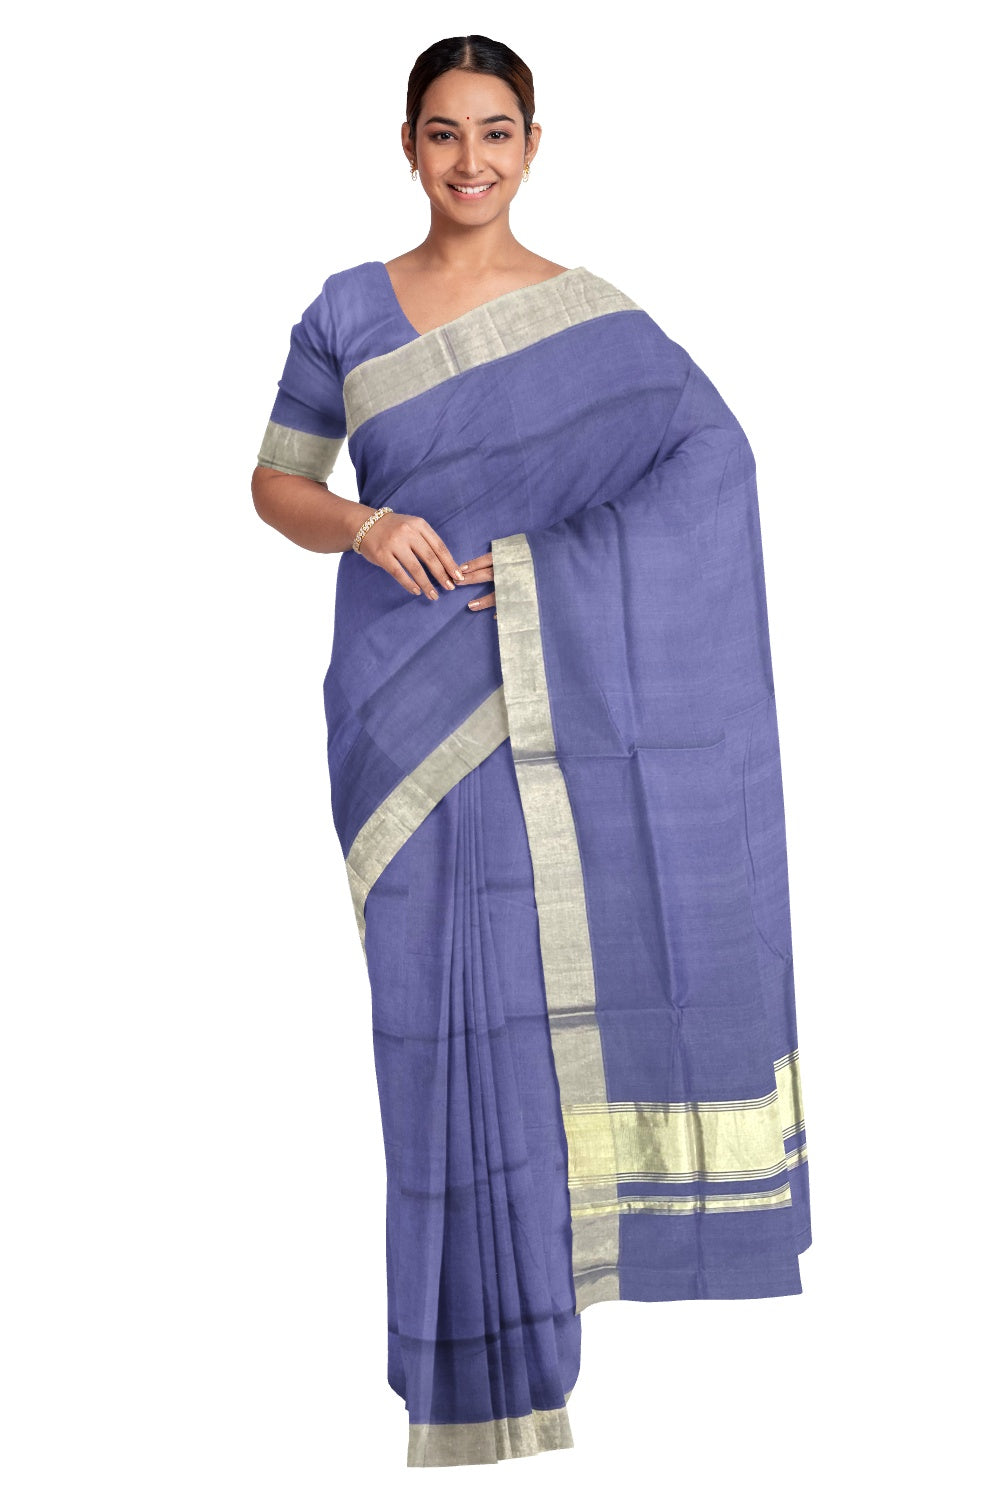 Southloom Balaramapuram Handloom Cotton Violet Saree with Silver Border